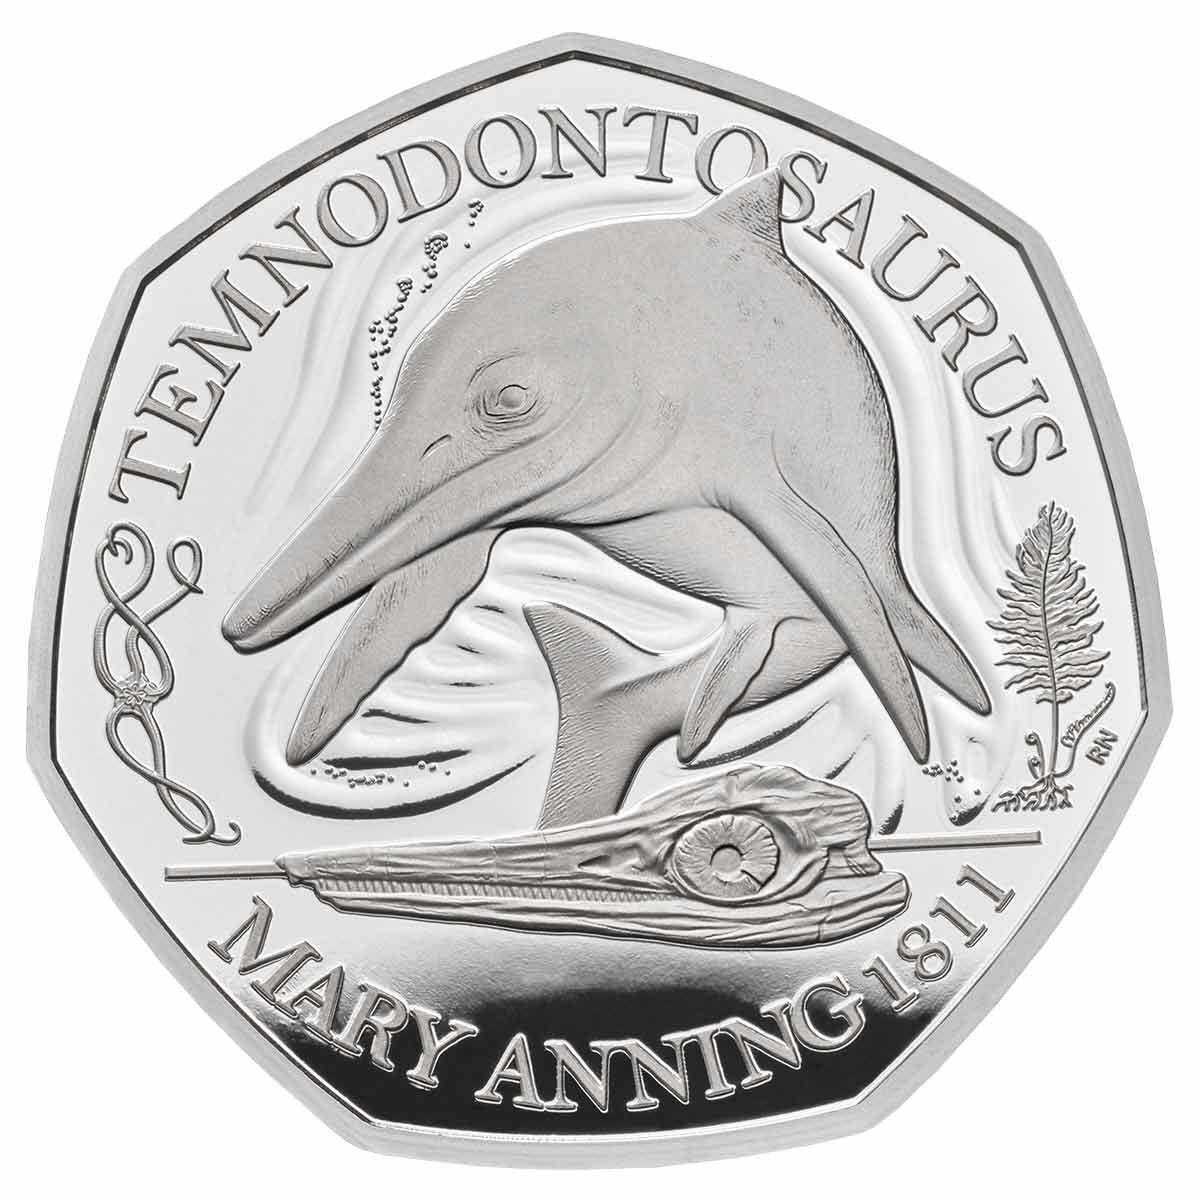 2021 Temnodontosaurus 50p Silver Proof Coin